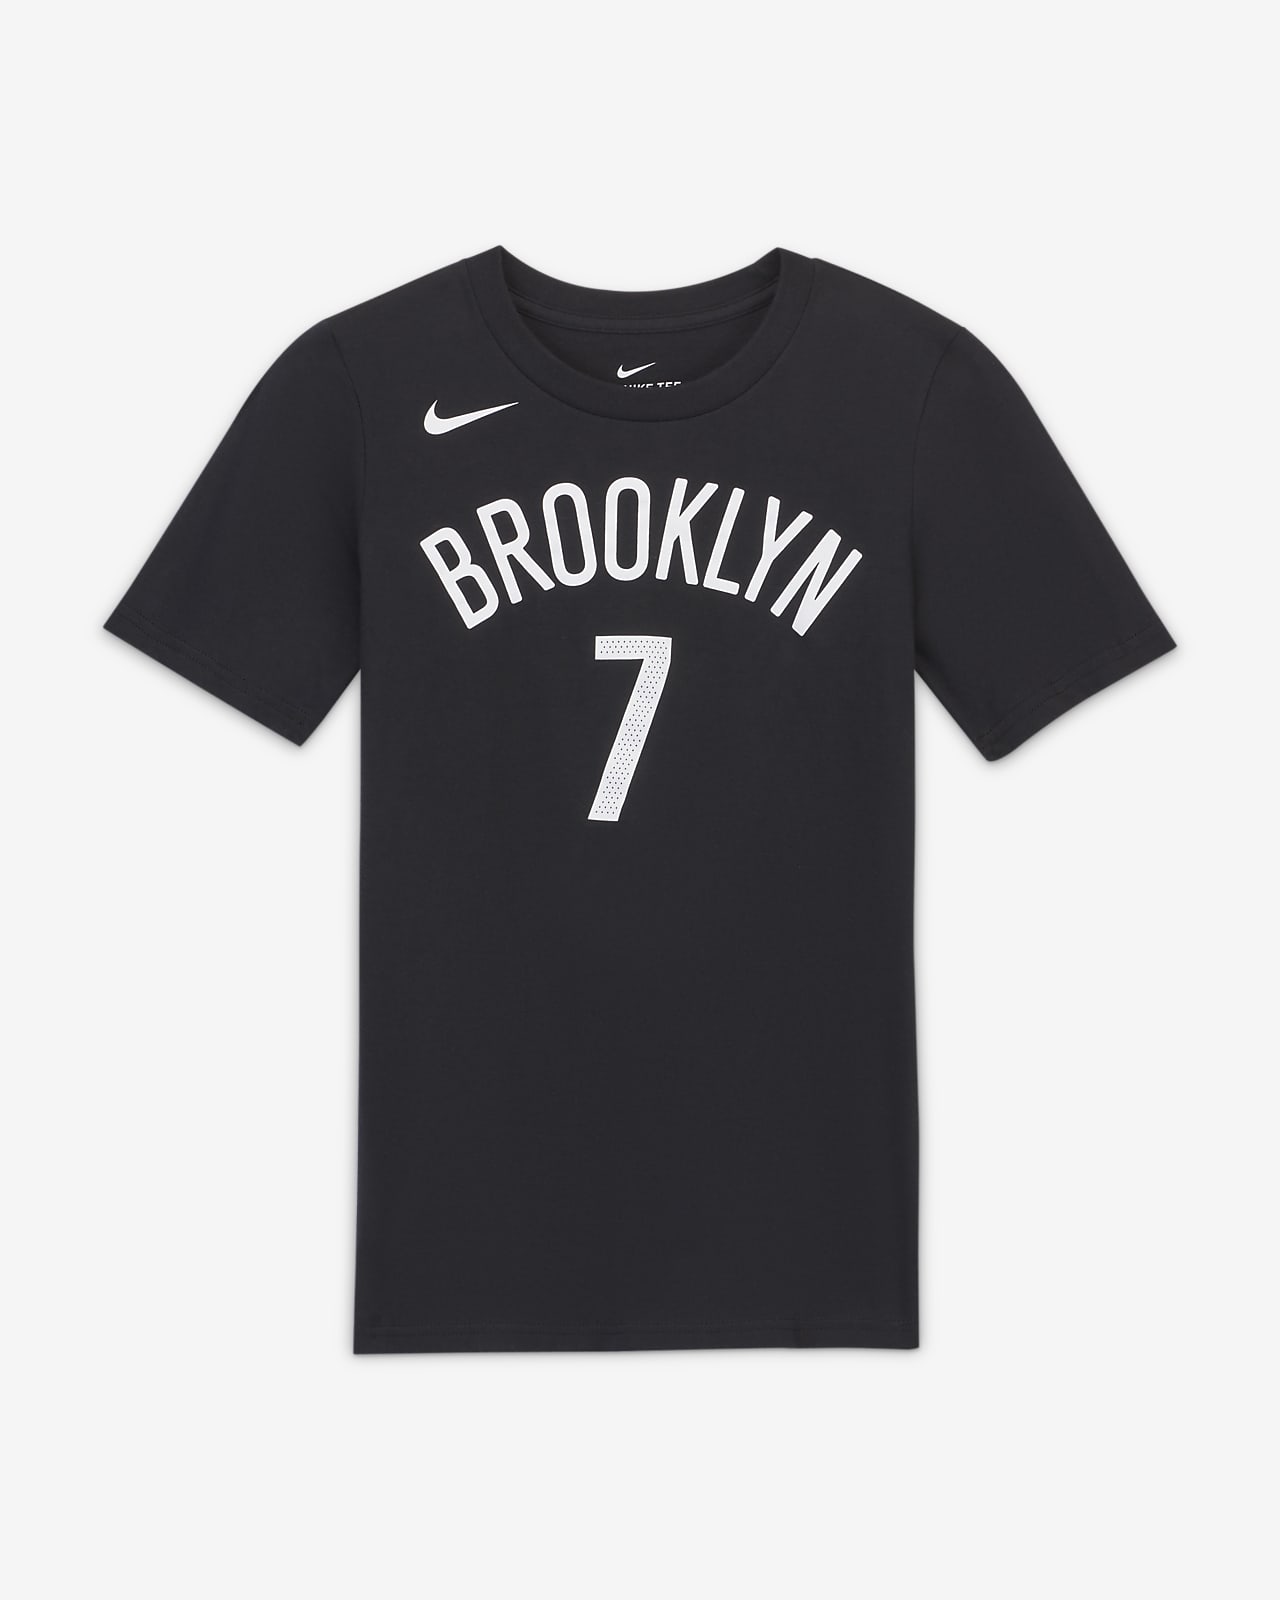 T-Shirt Nike NBA Player Kevin Durant Μπρούκλιν Νετς για μεγάλα παιδιά